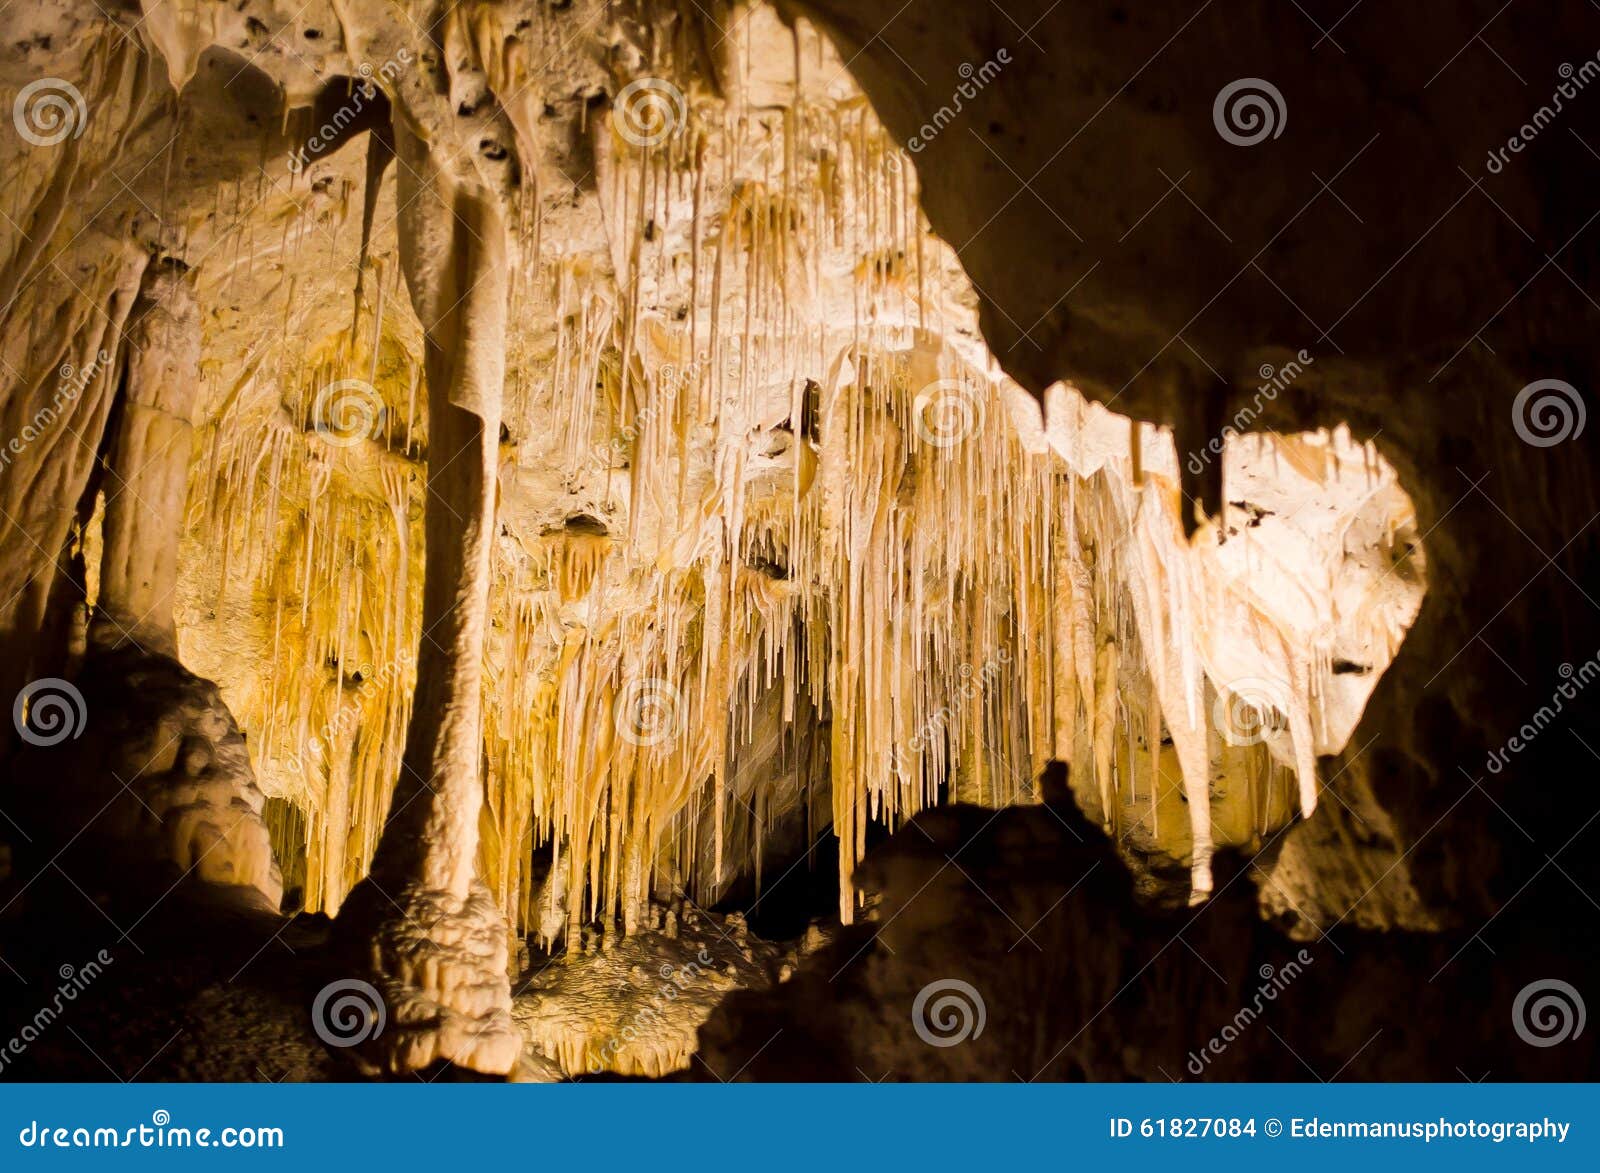 stalactites & columns in carlsbad caverns